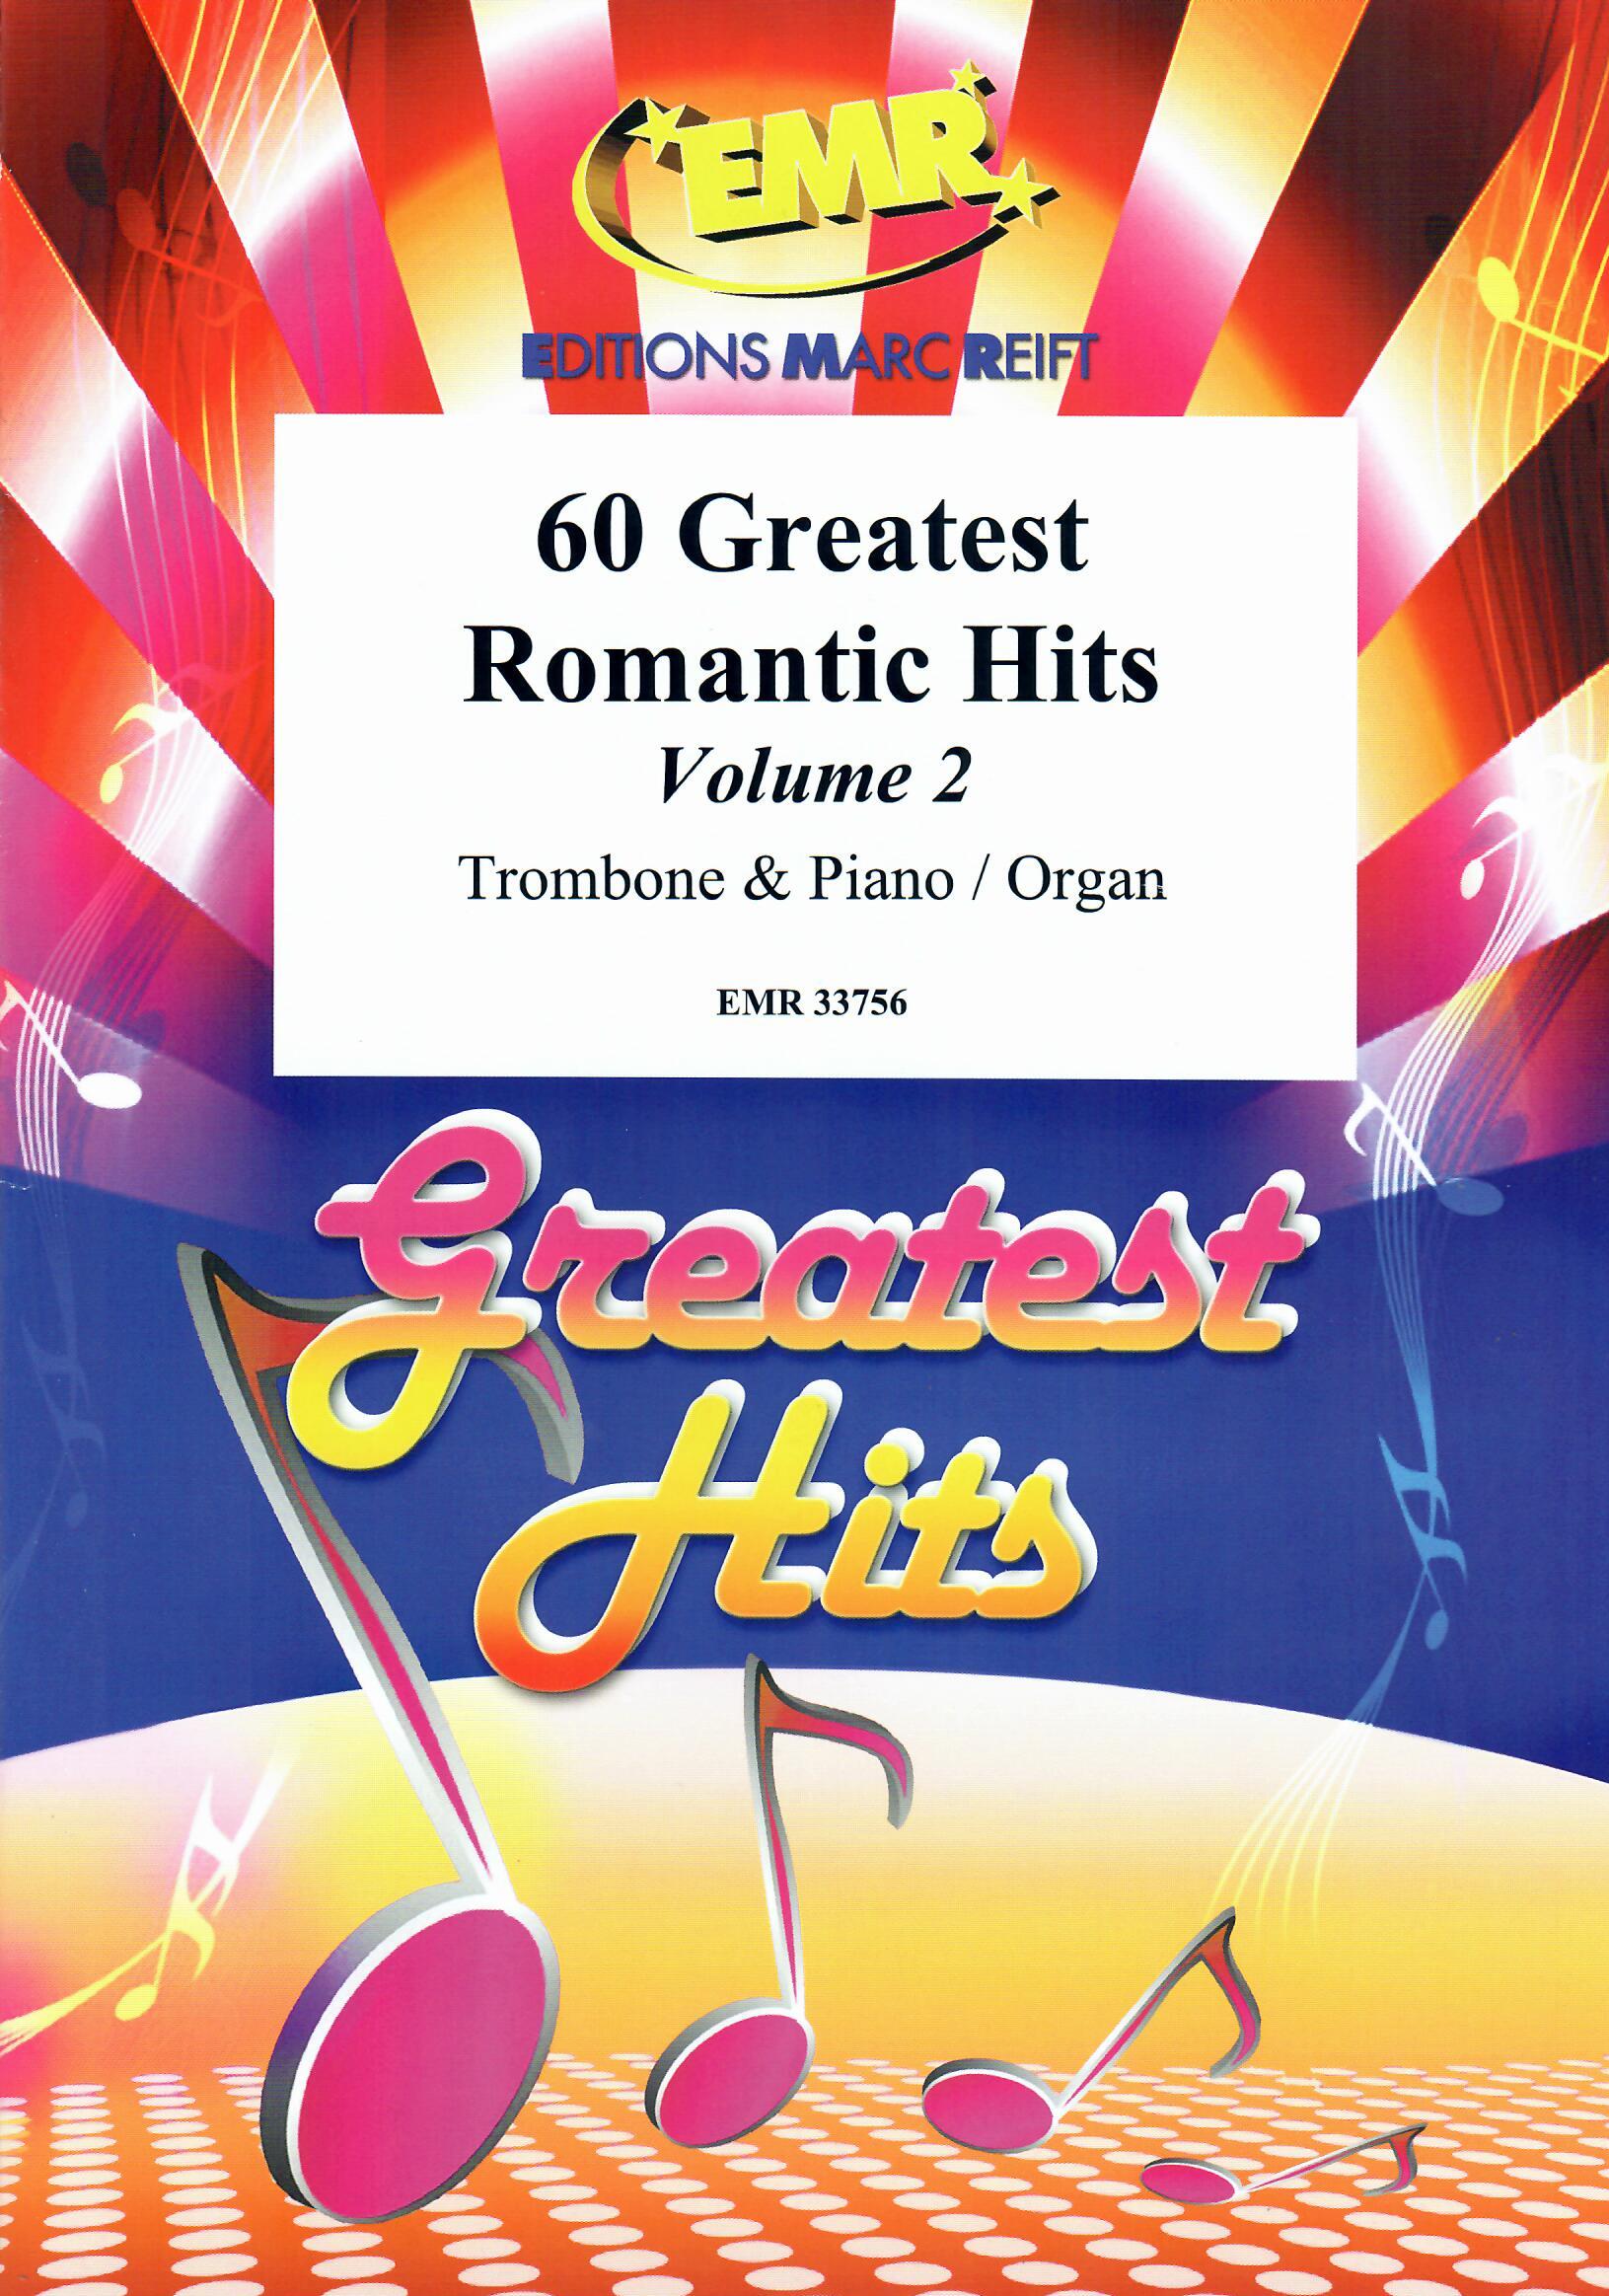 60 GREATEST ROMANTIC HITS VOLUME 2, SOLOS - Trombone